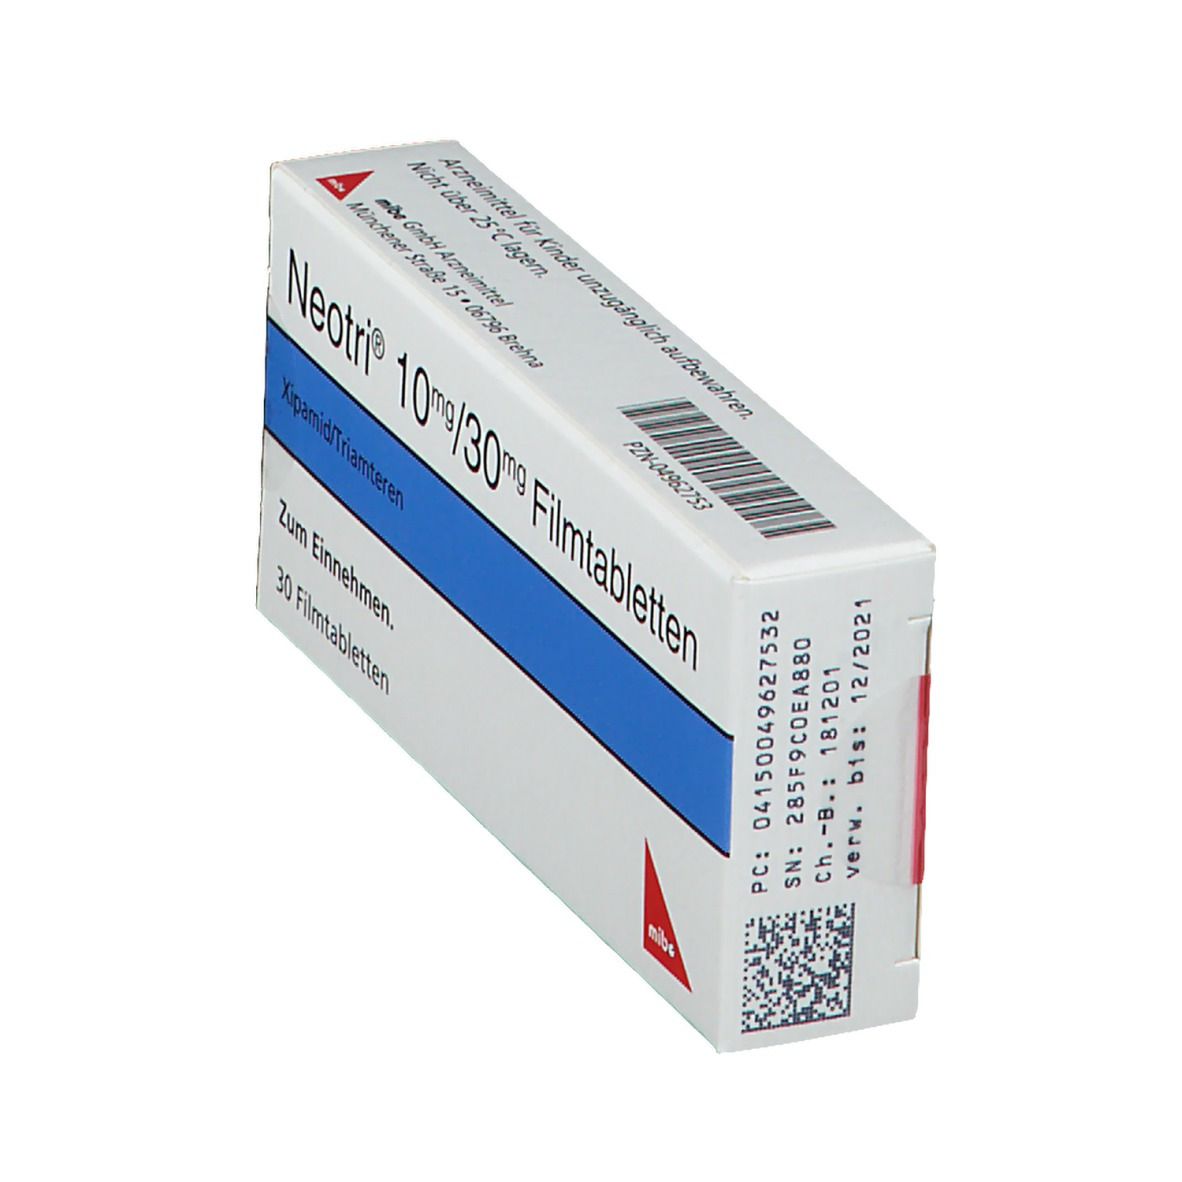 Neotri 10 mg/30 mg